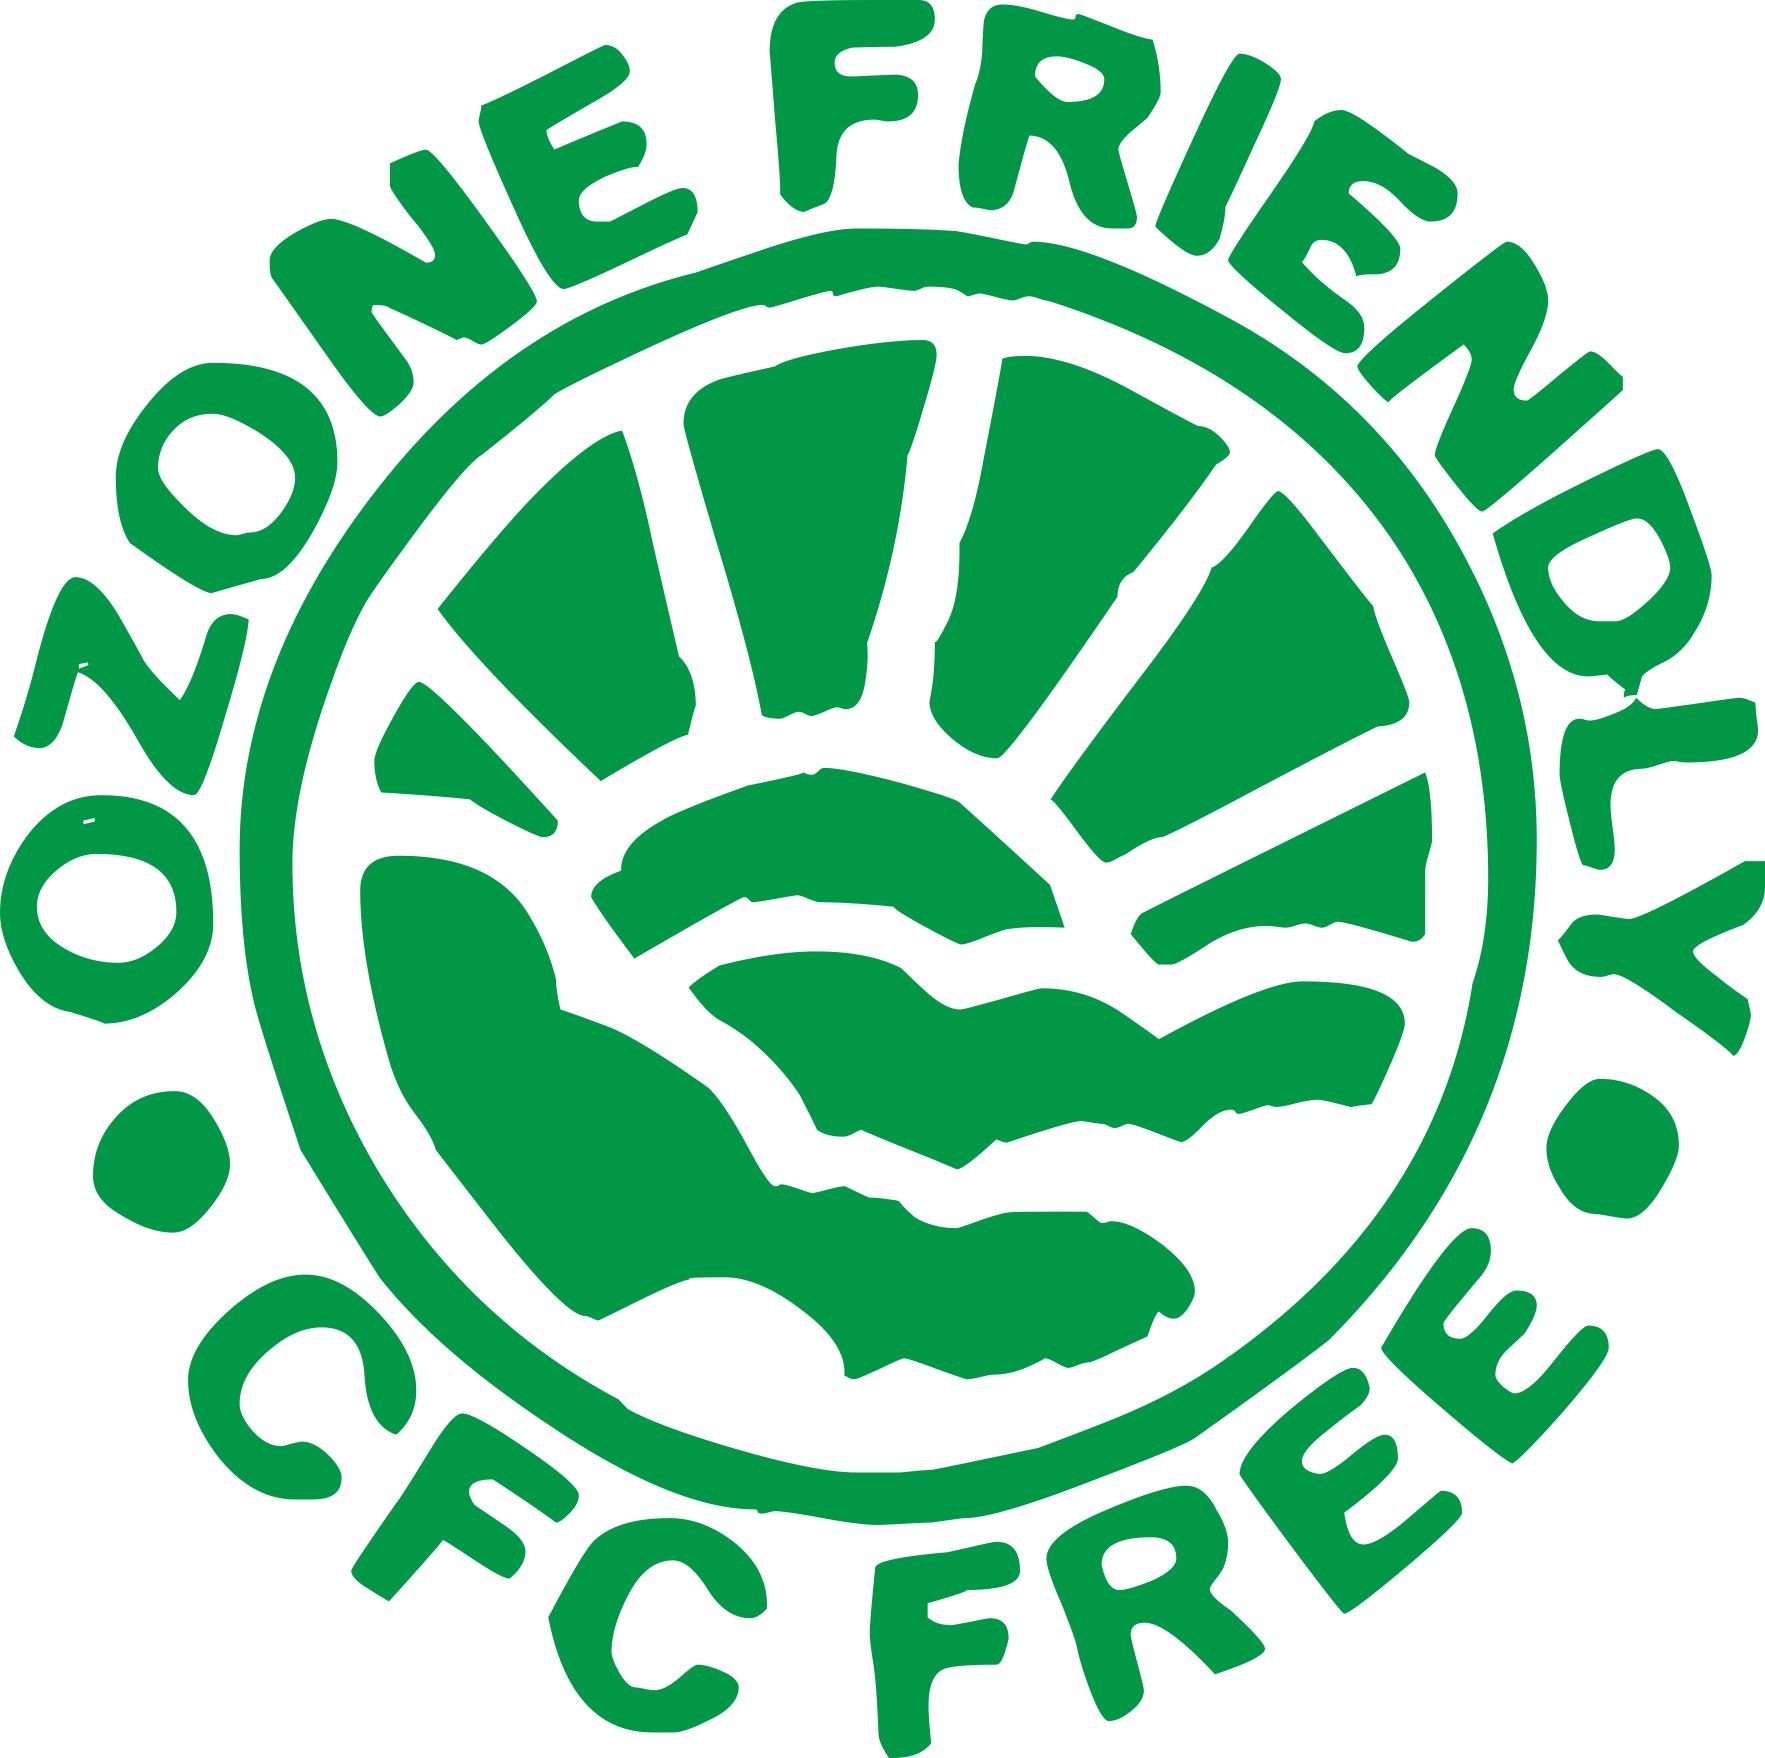 Friendly products. Экознак Ozone friendly. Экологический знак Ozone friendly. Ozone friendly маркировка.